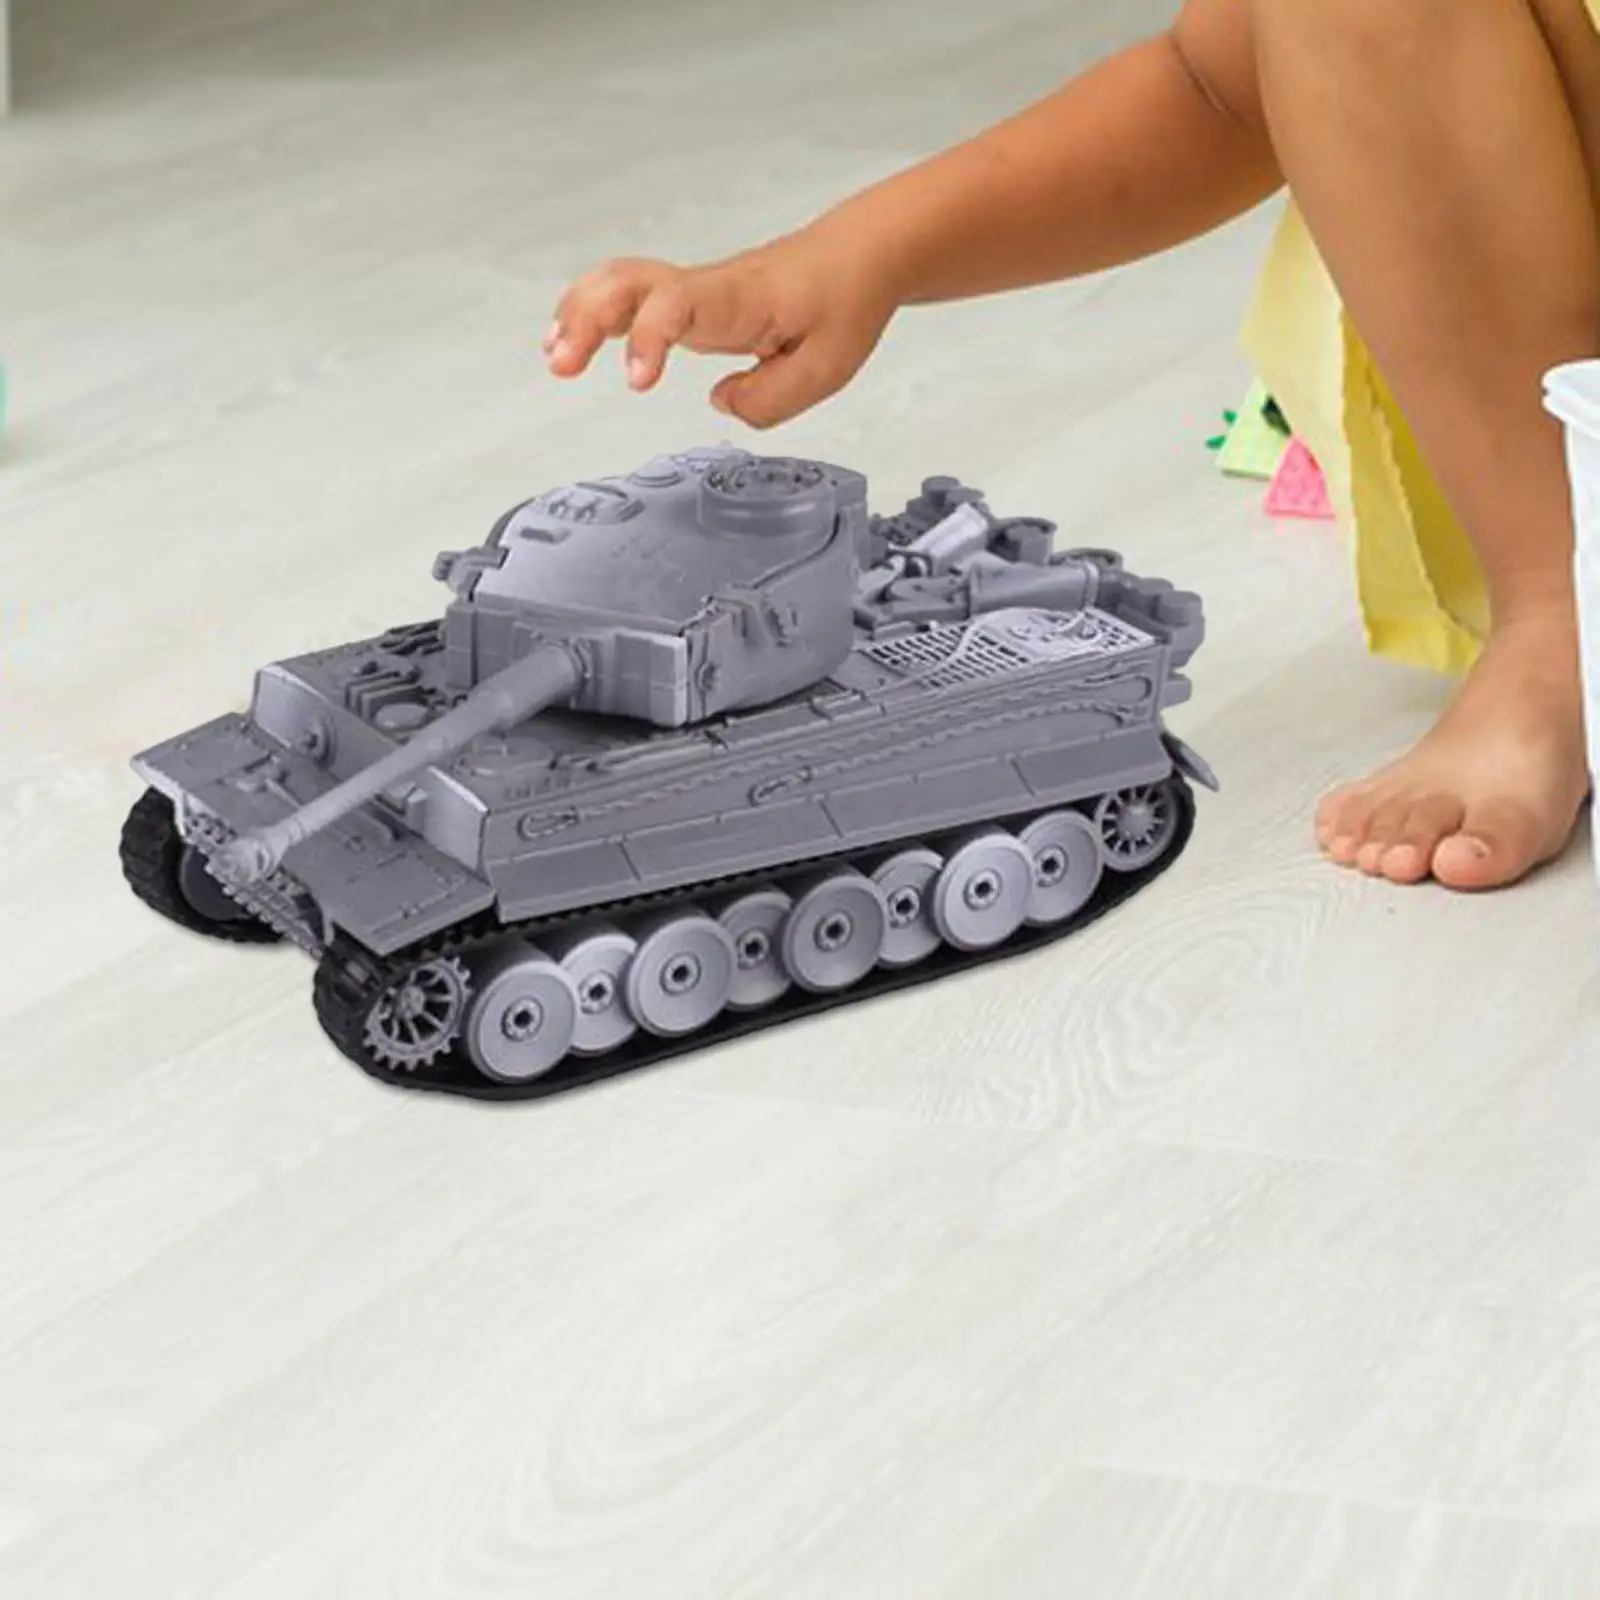 Tank Model Kit, 4D Puzzles Model Building Kits Action Model for Boys Children Kids